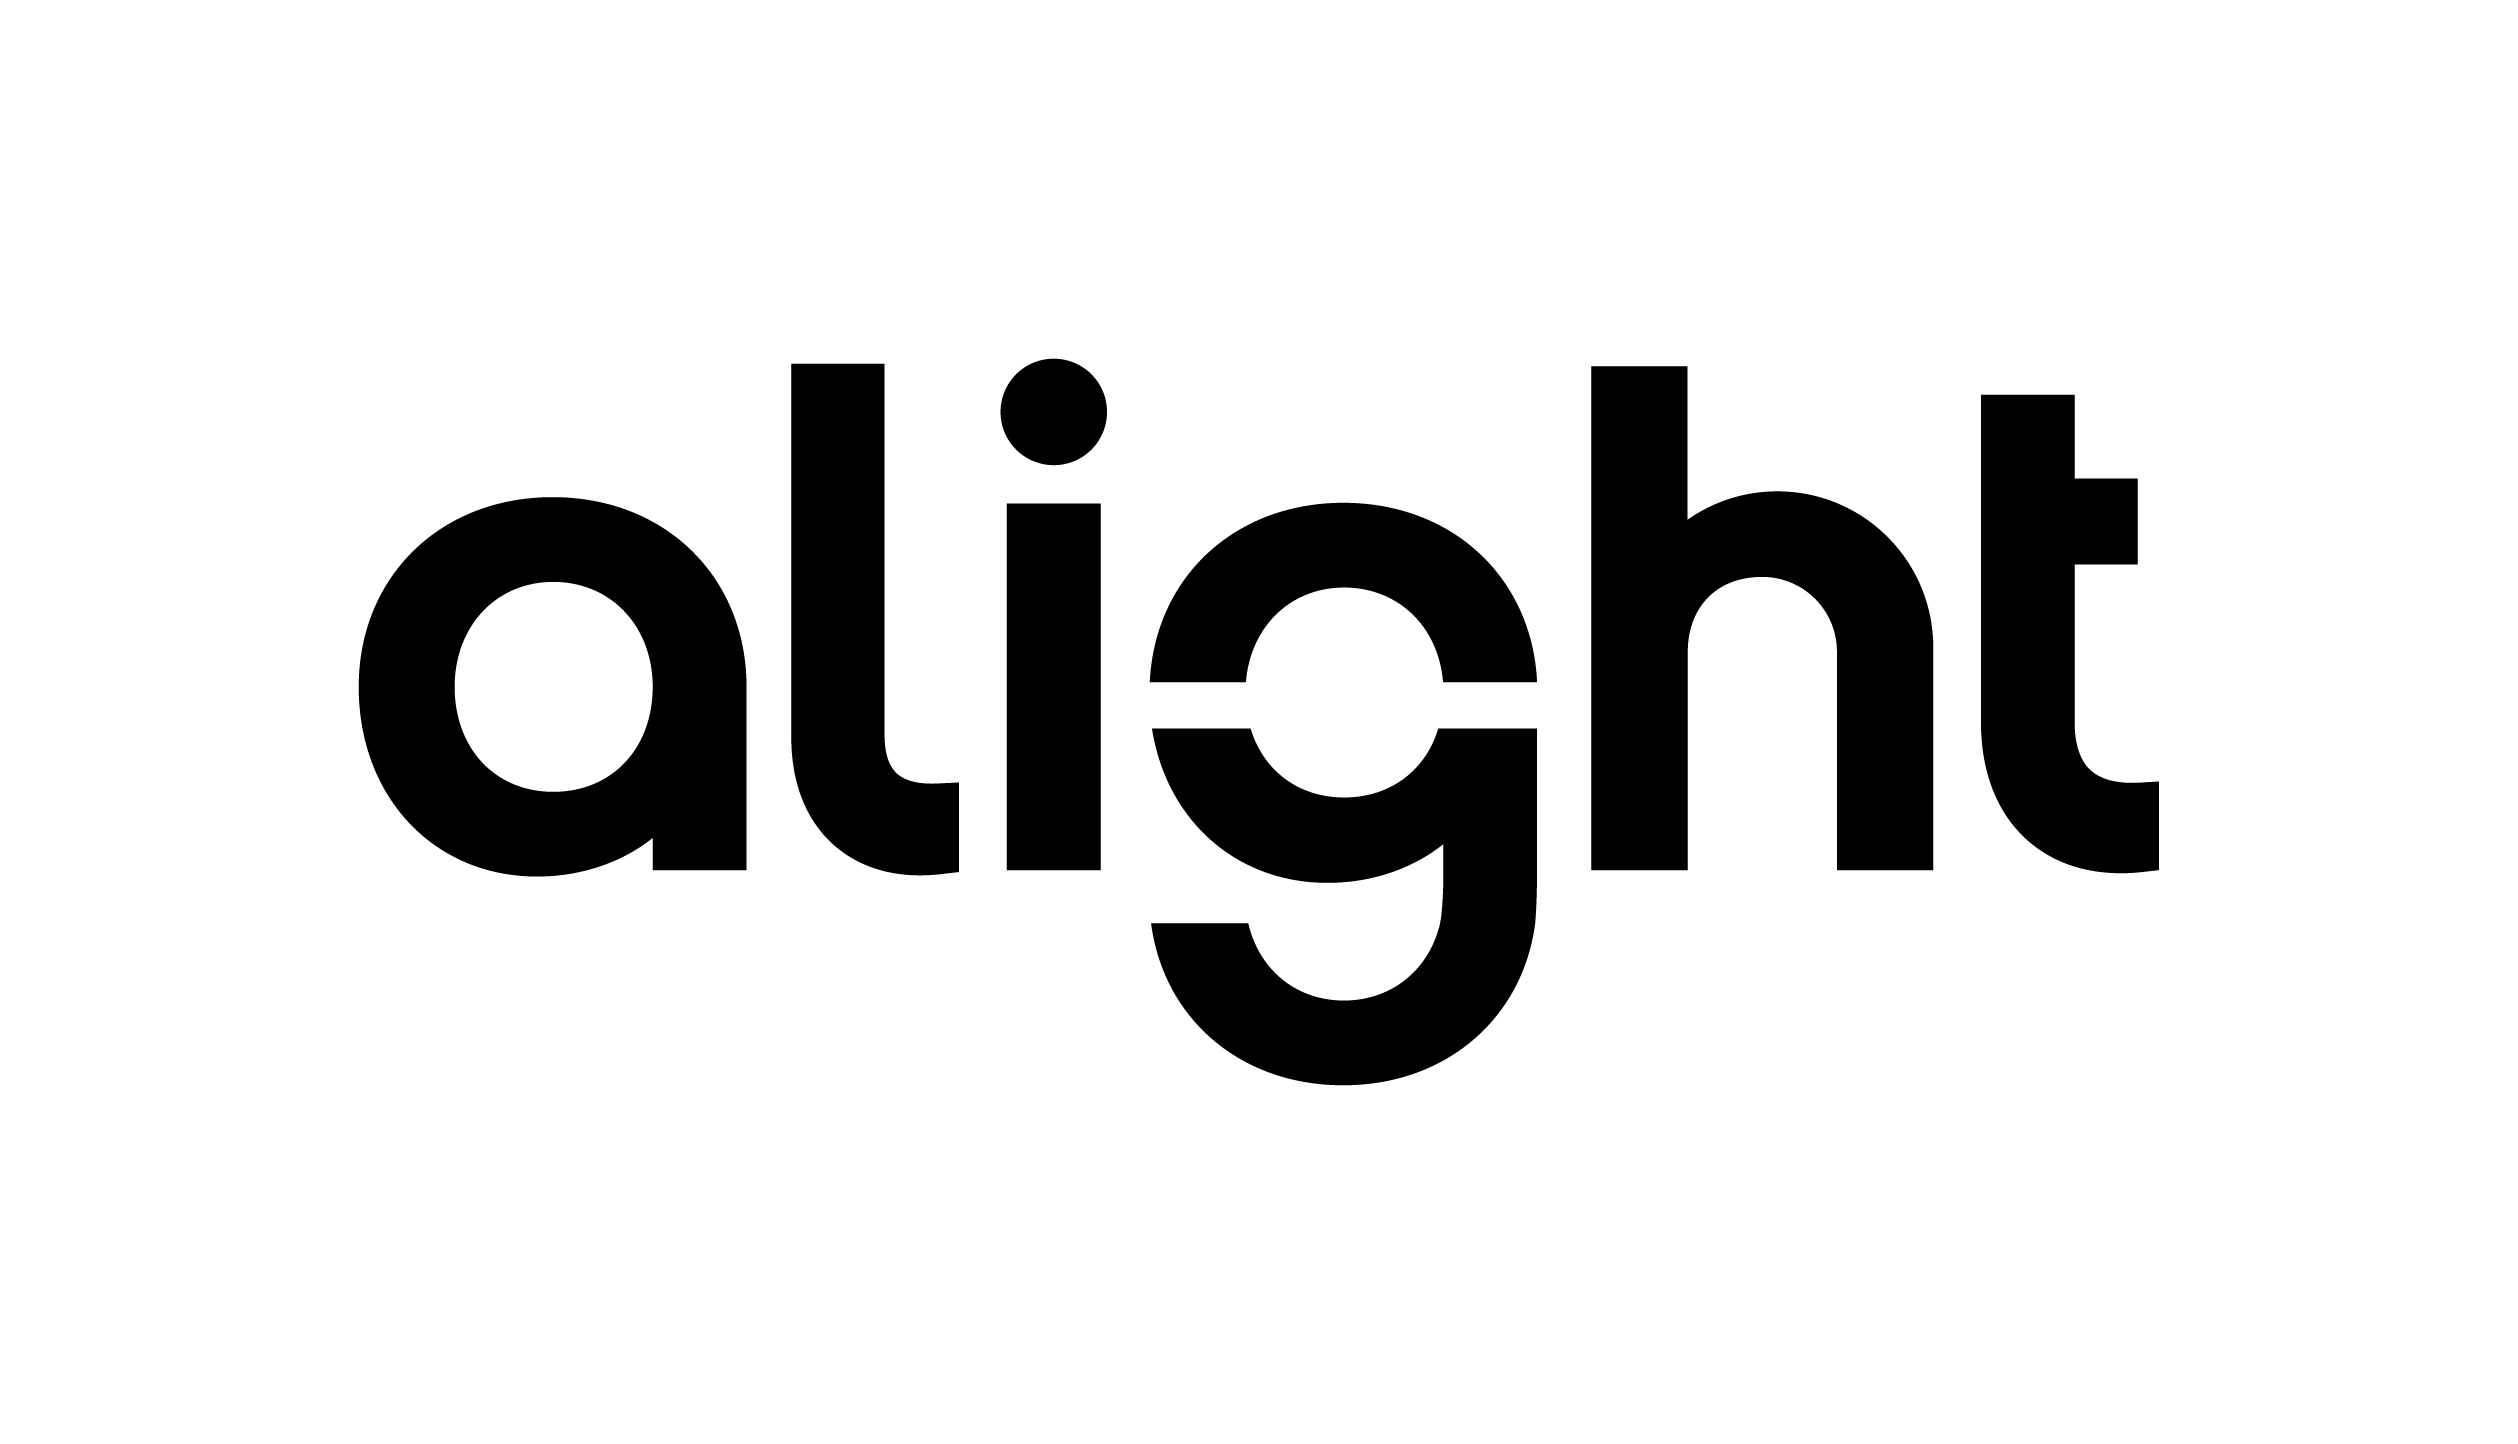 Align Capital Partners